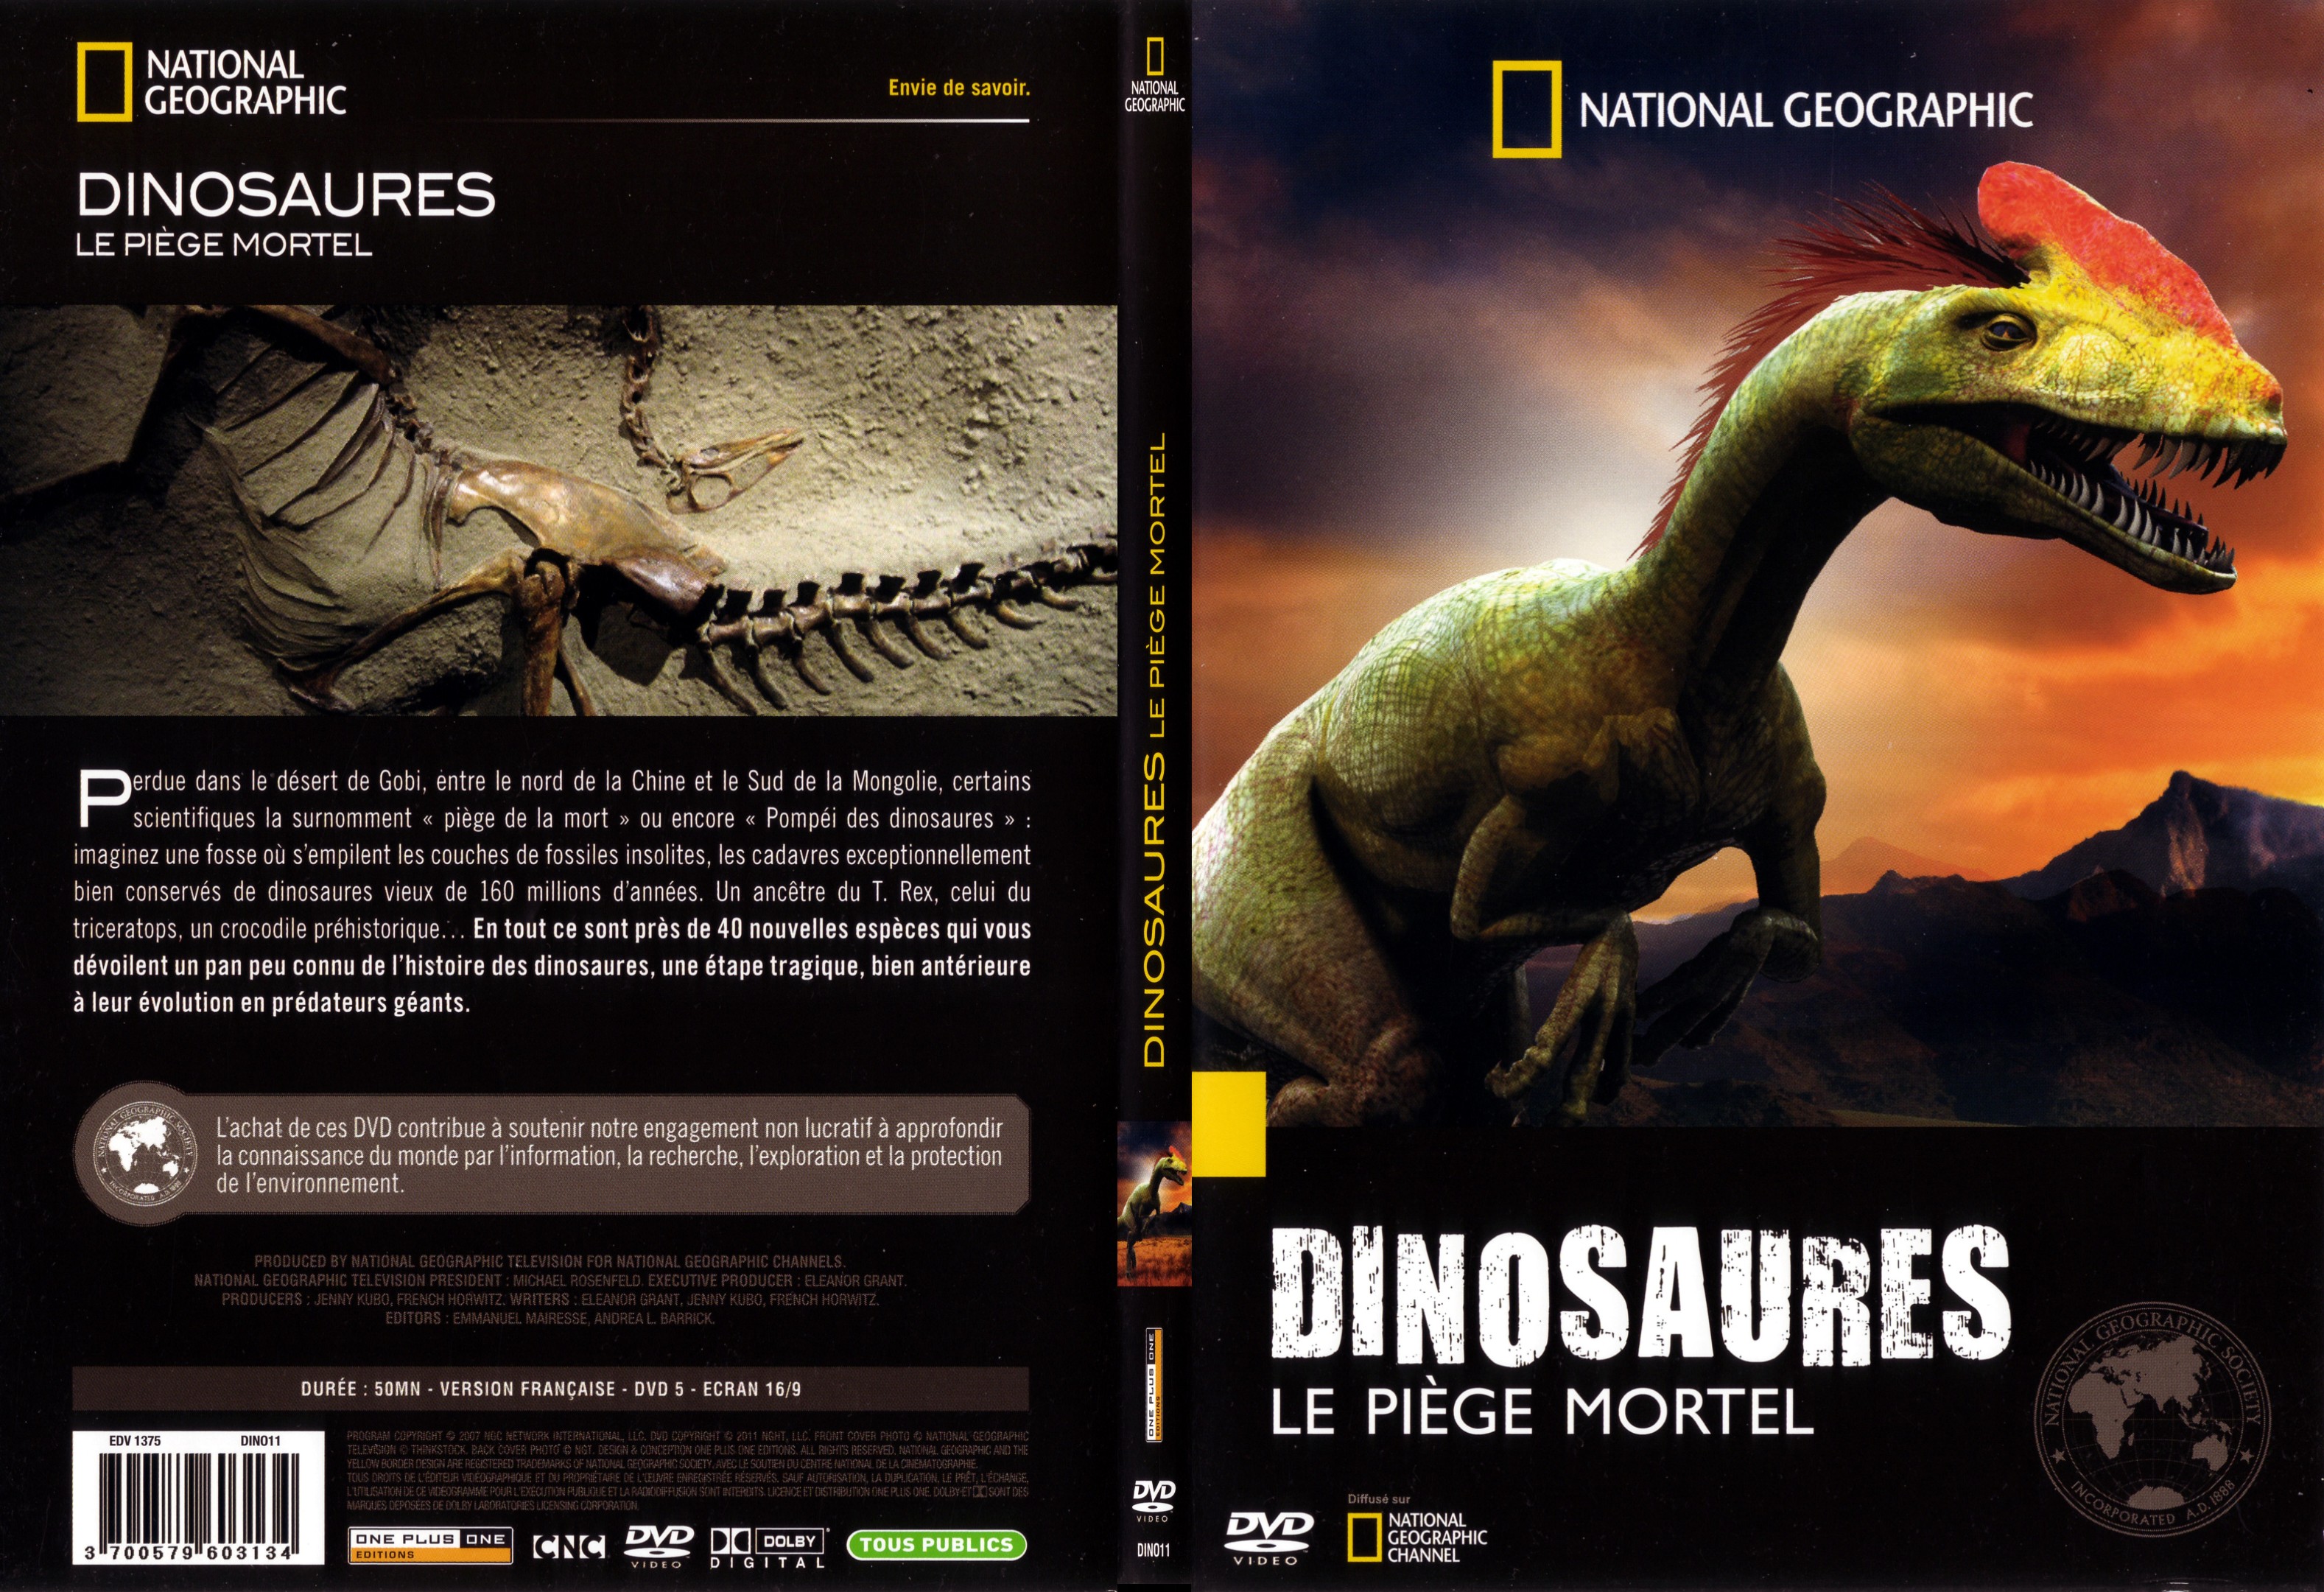 Jaquette DVD National geographic - Dinosaures Le piege mortel - SLIM